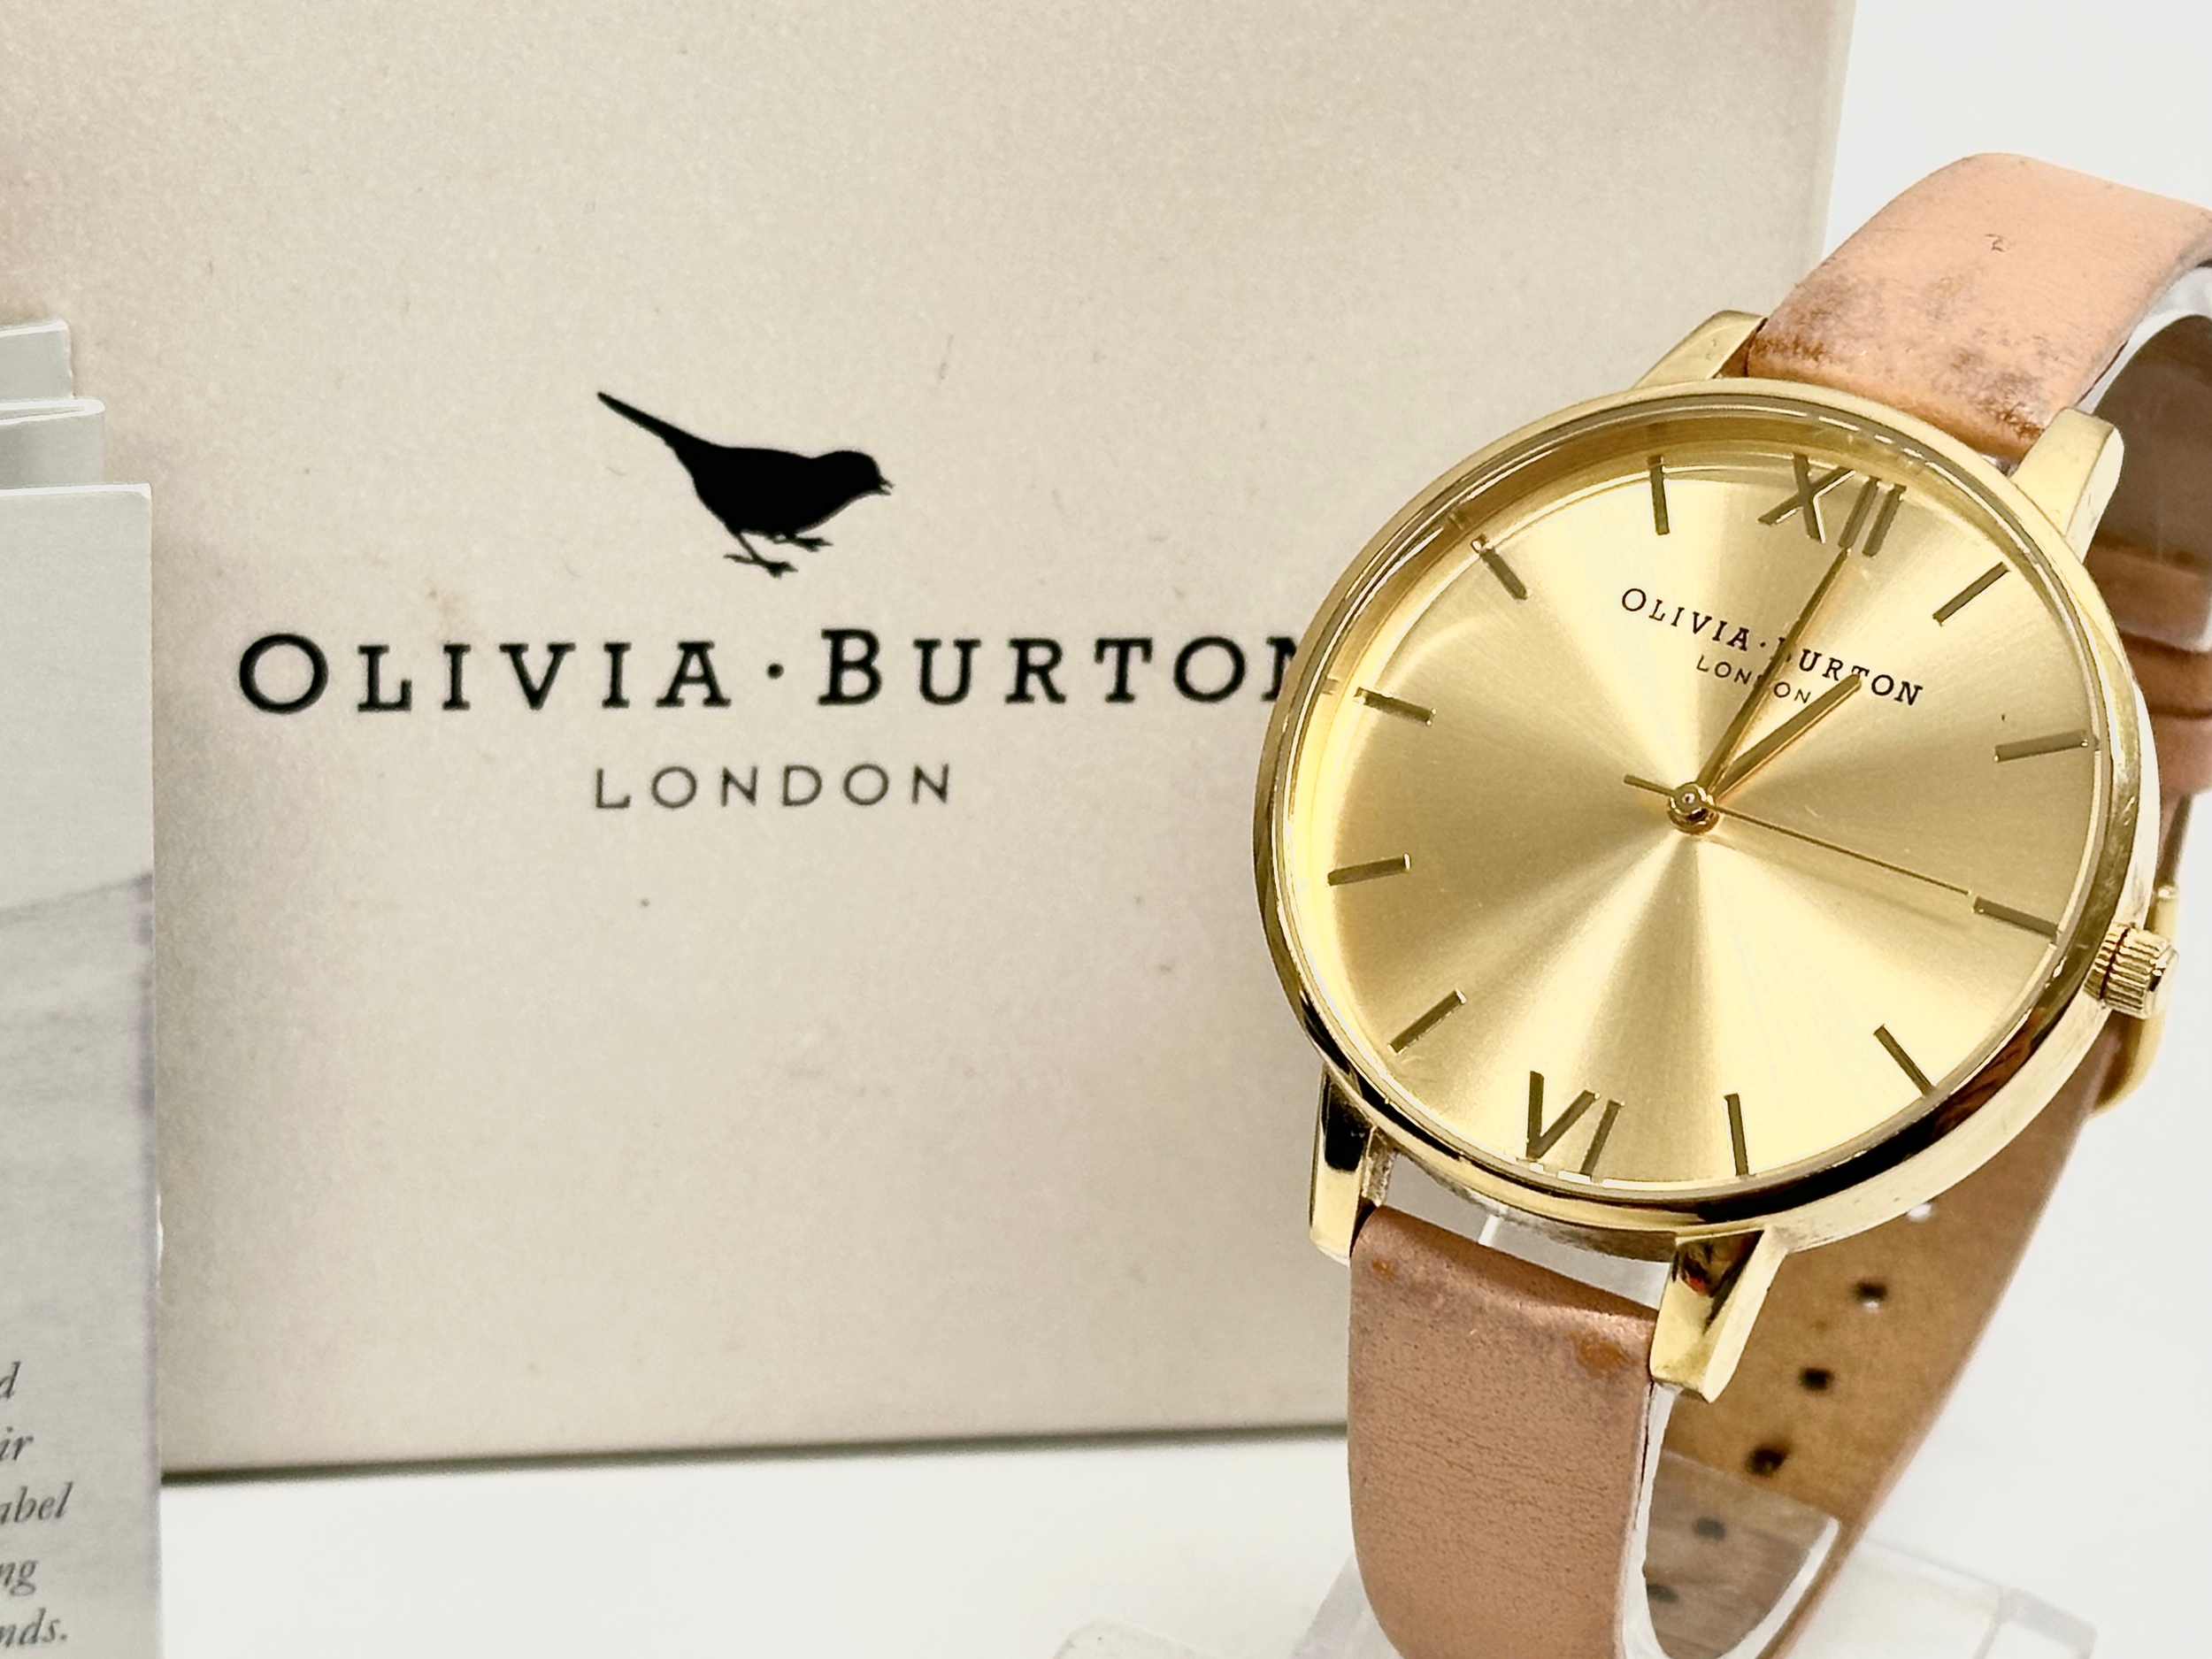 An Olivia Burton watch with box.